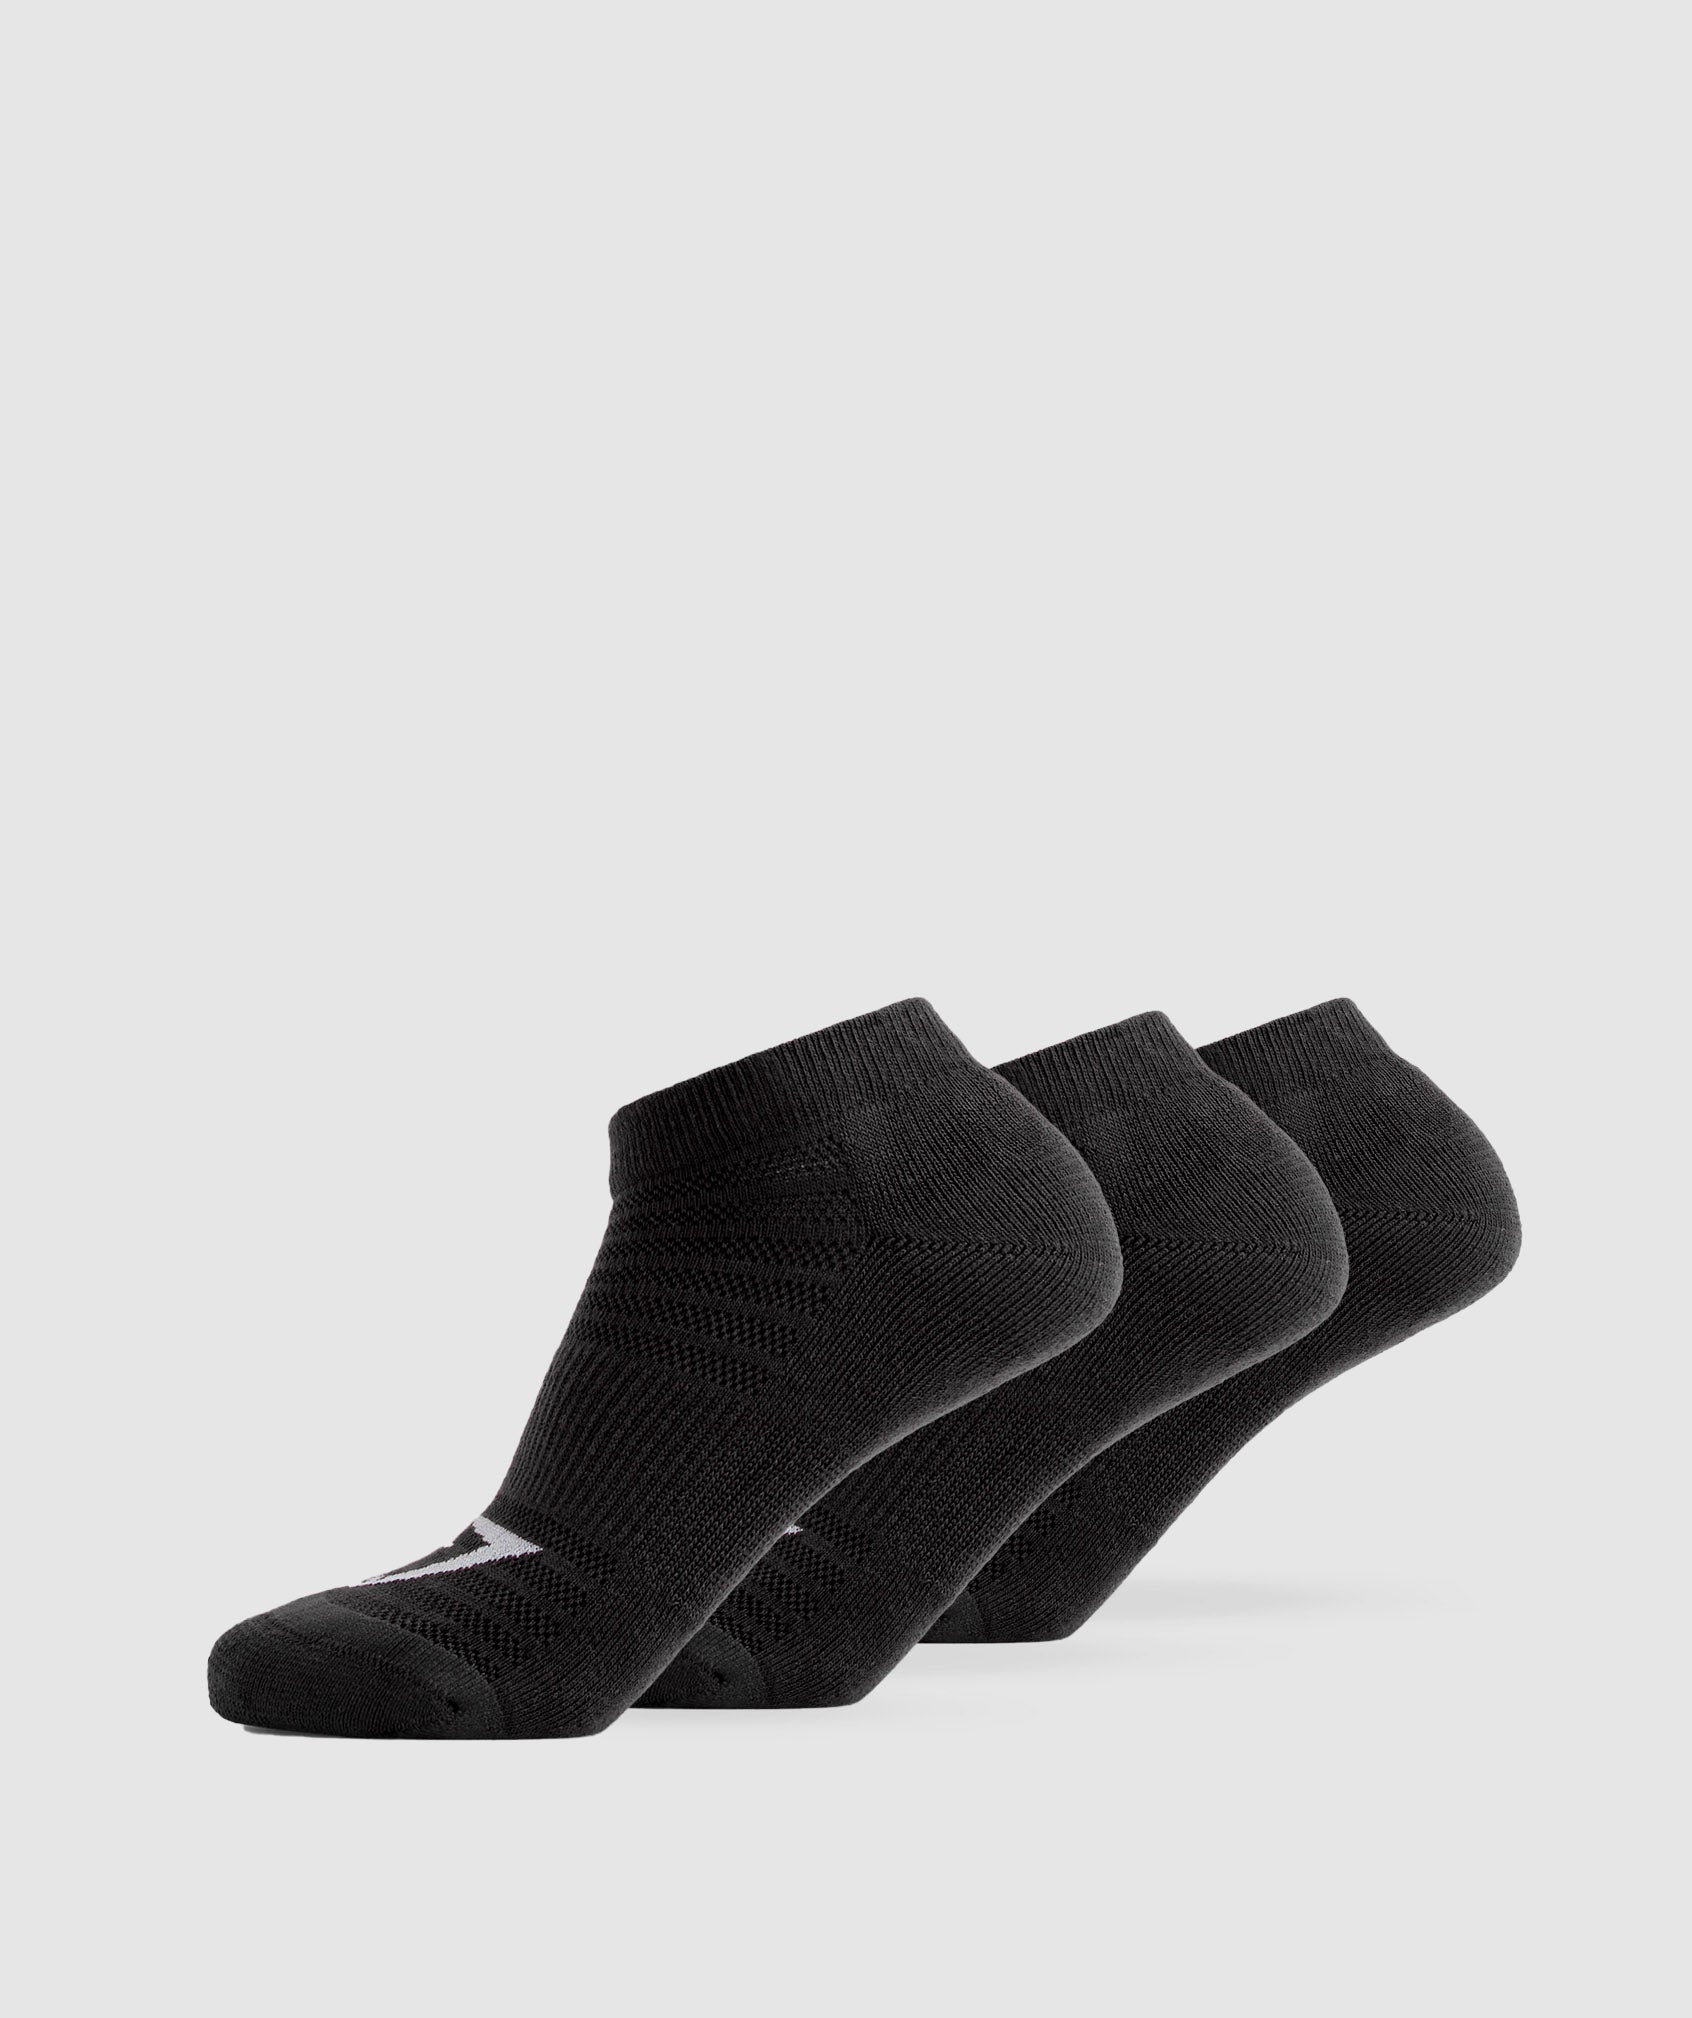 Foot Pump Socks - Grey